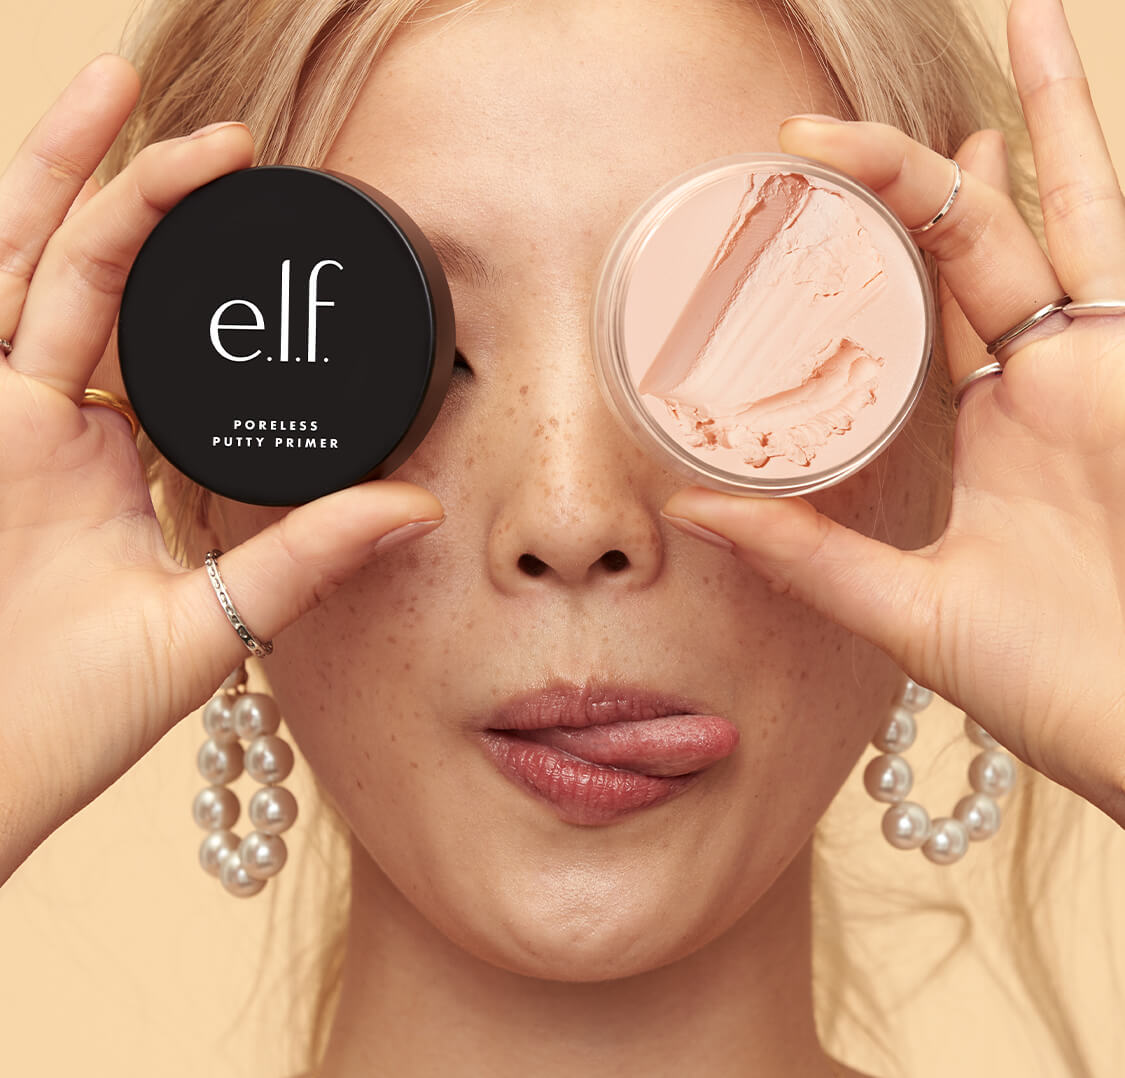 Meet the e.l.f. icons | e.l.f. Cosmetics